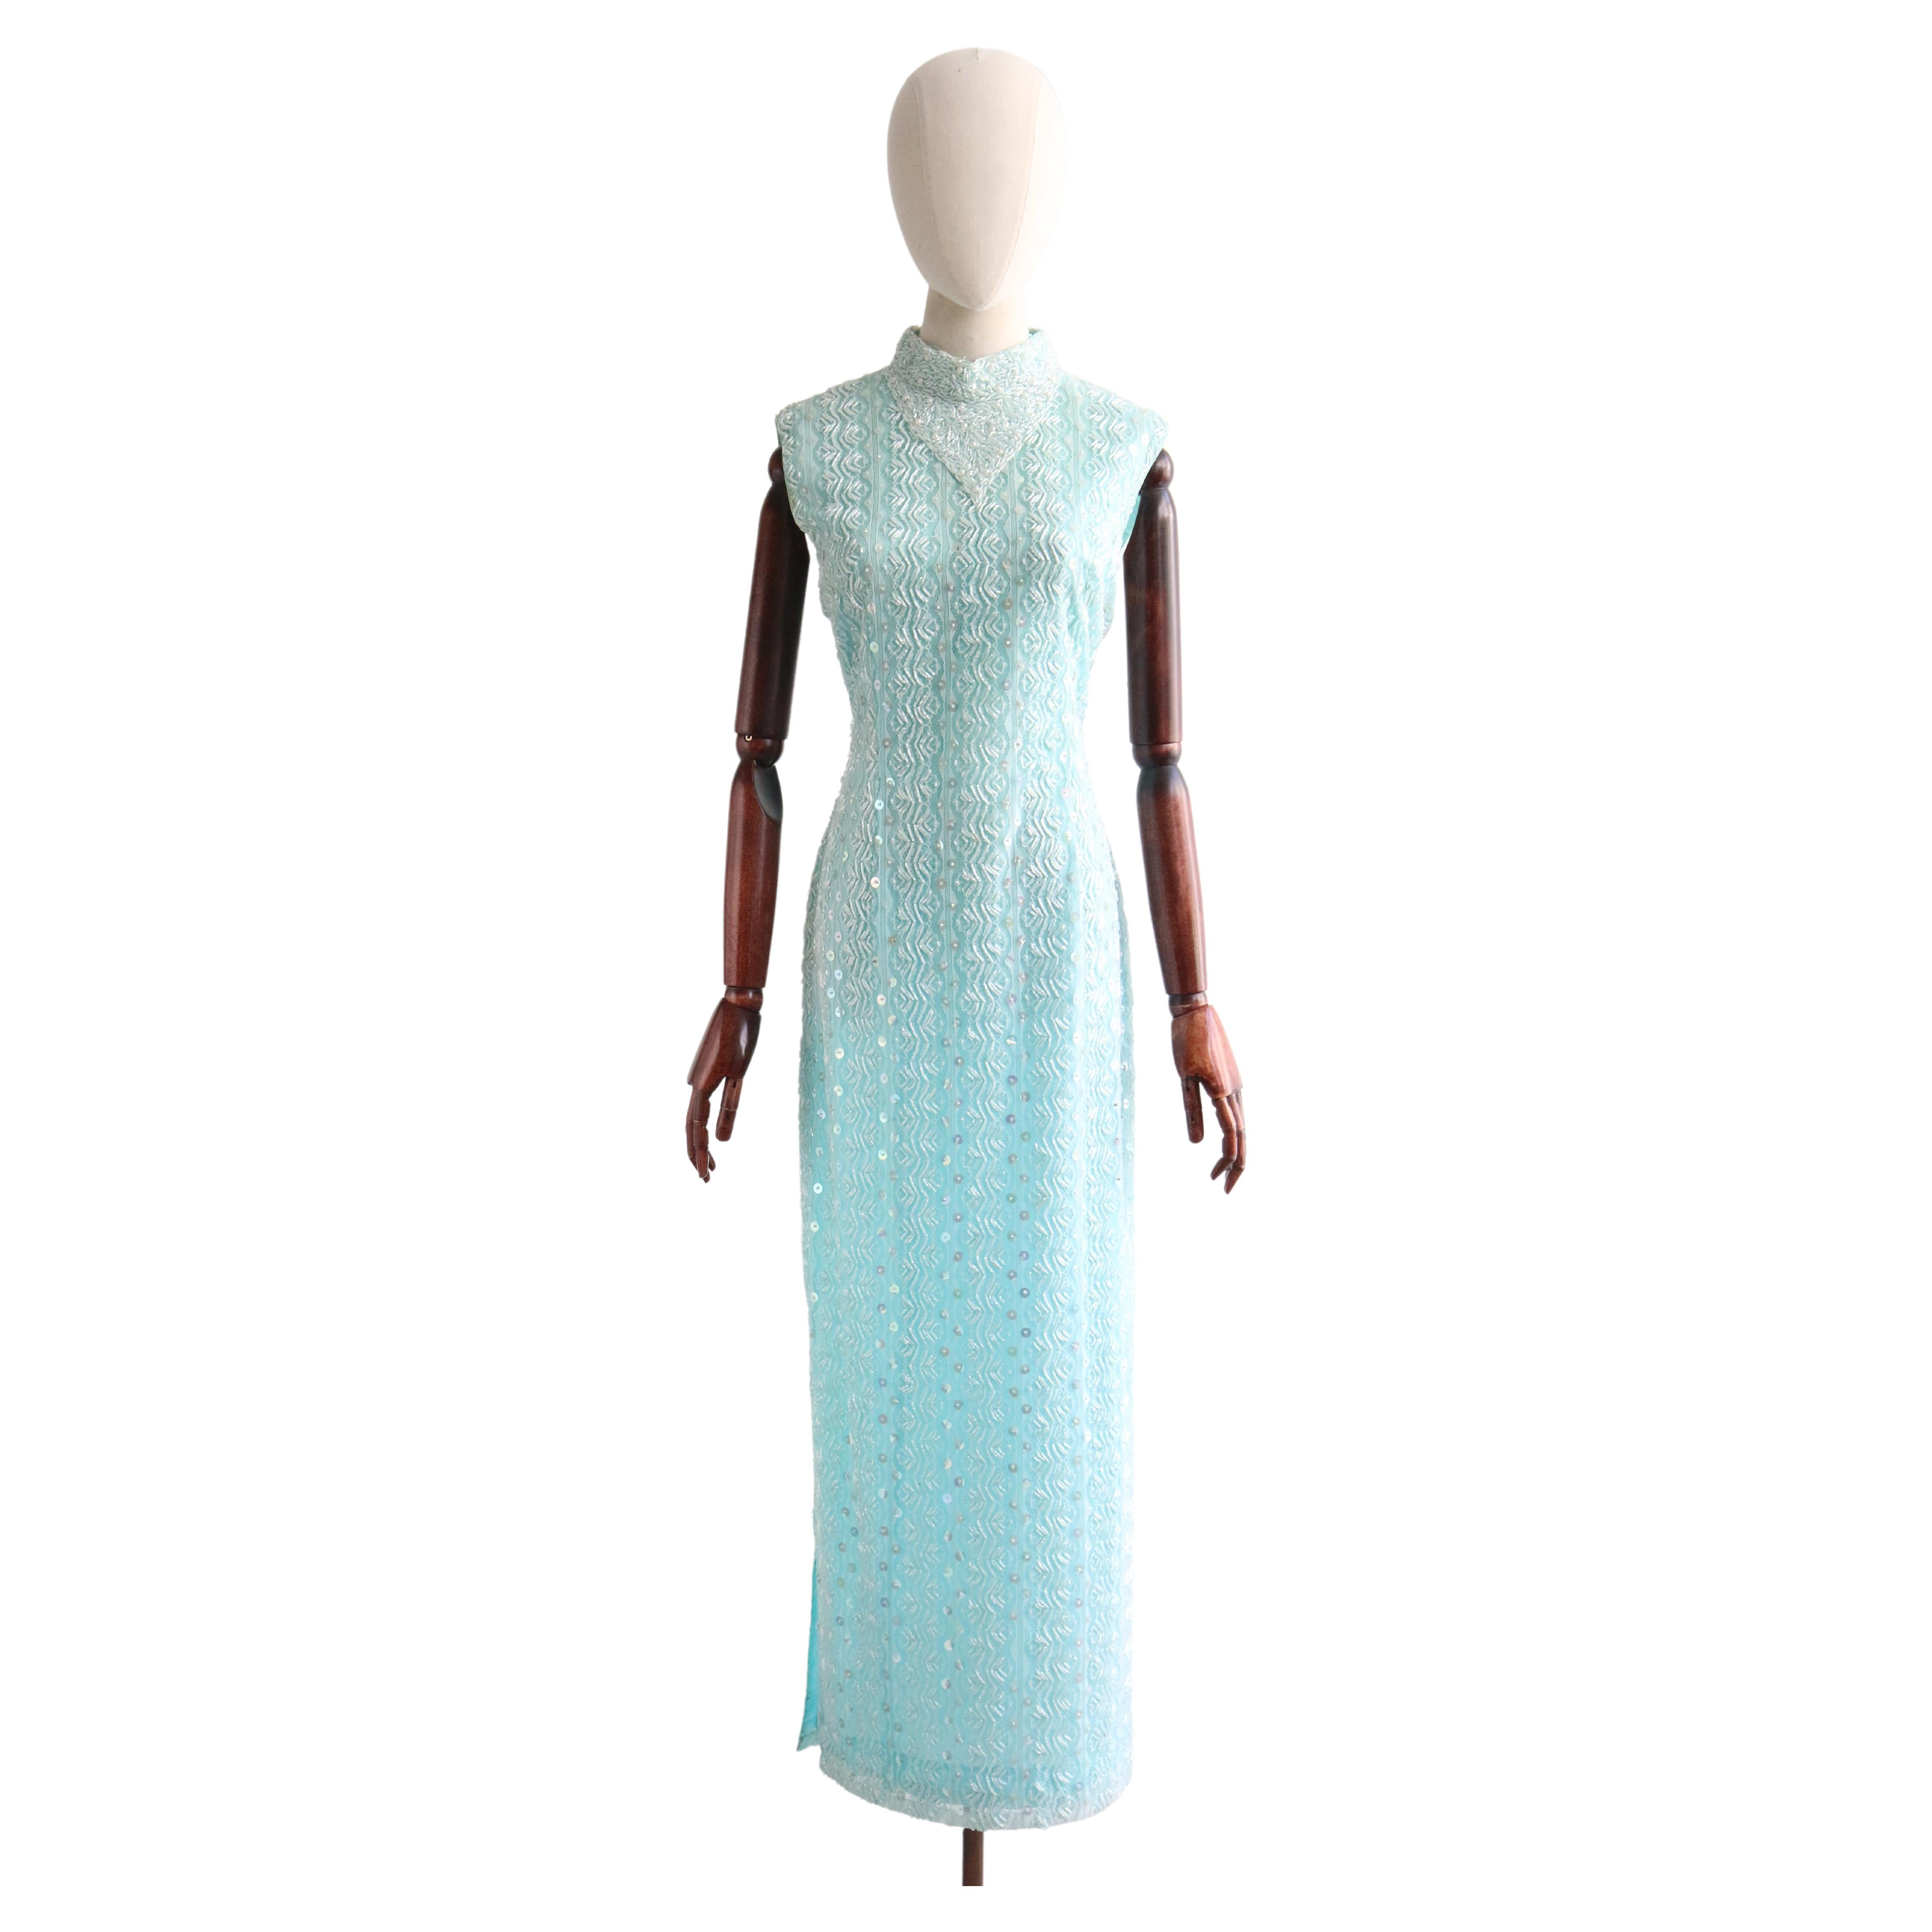 Vintage 1960's Aqua Beaded Lace Dress UK 10-12 US 6-8 For Sale